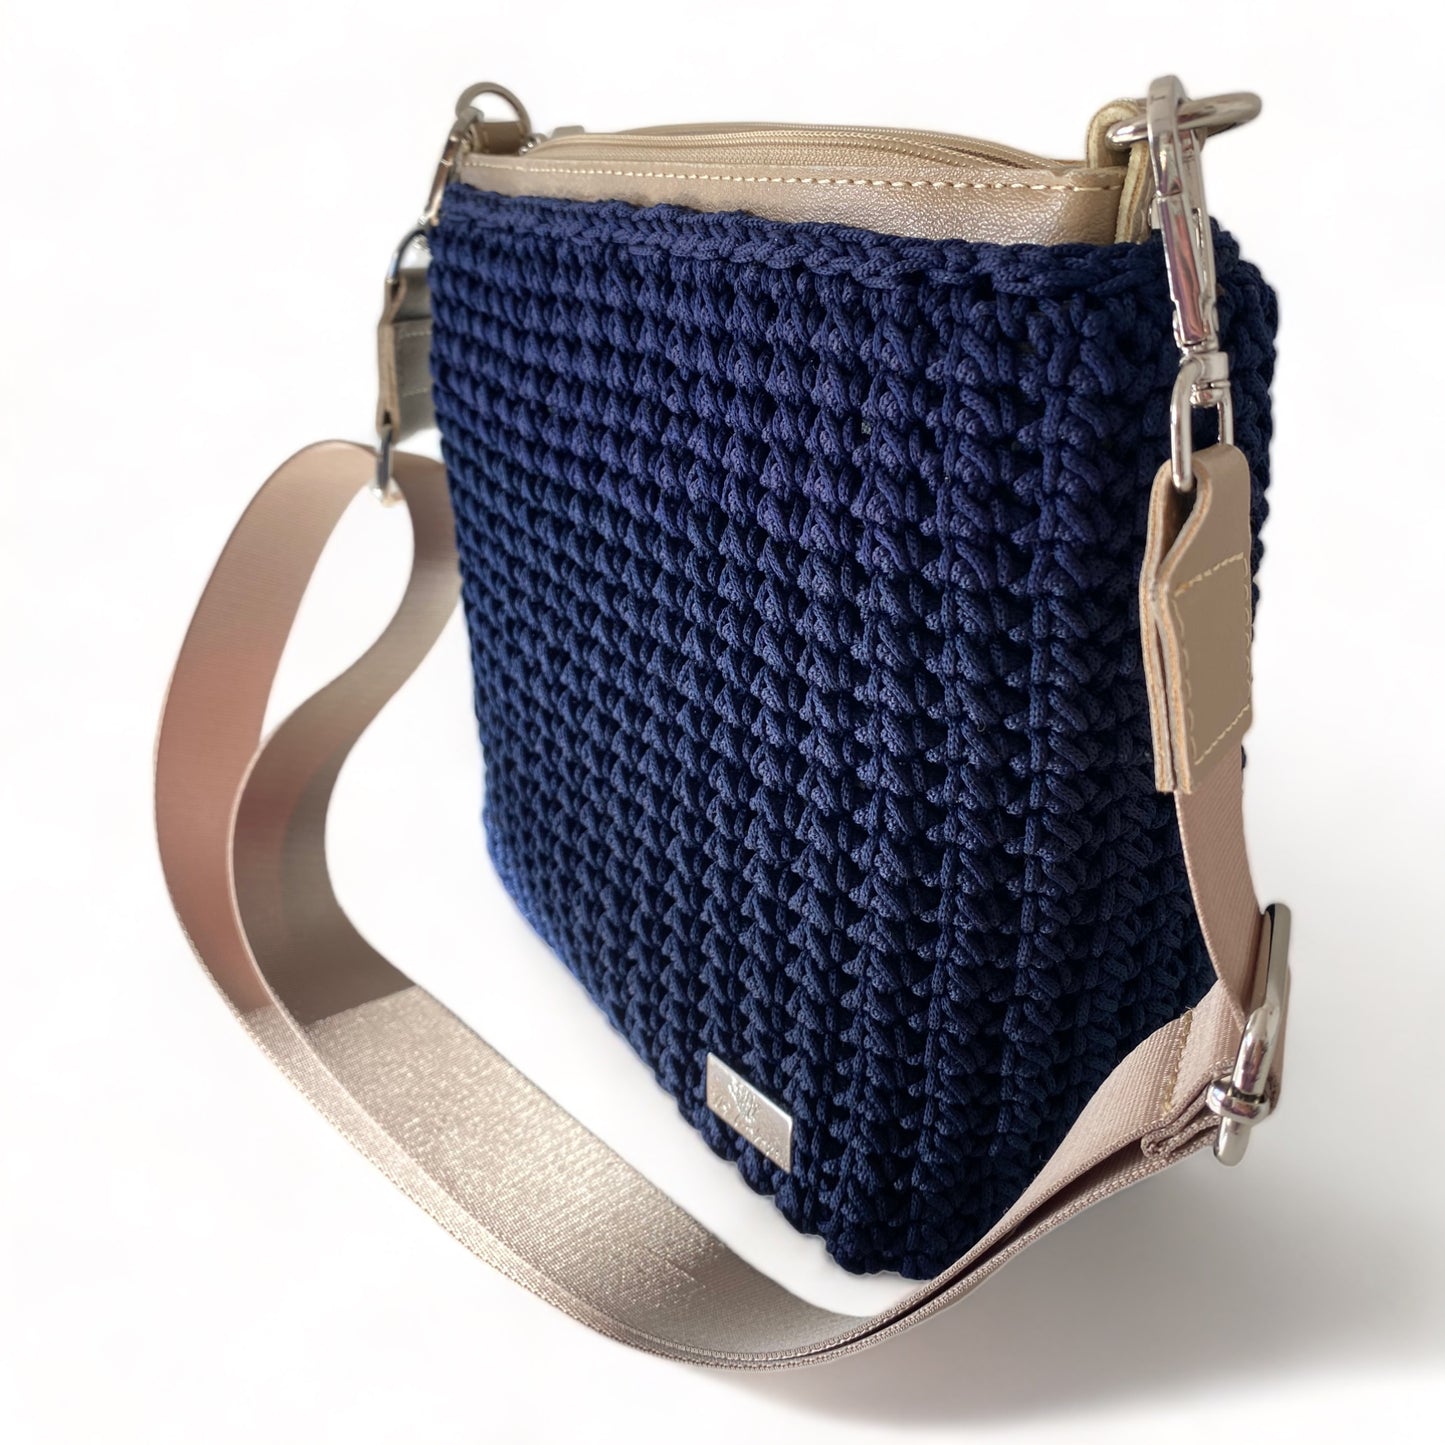 AMELIA - elegant and practical cross-body handbag